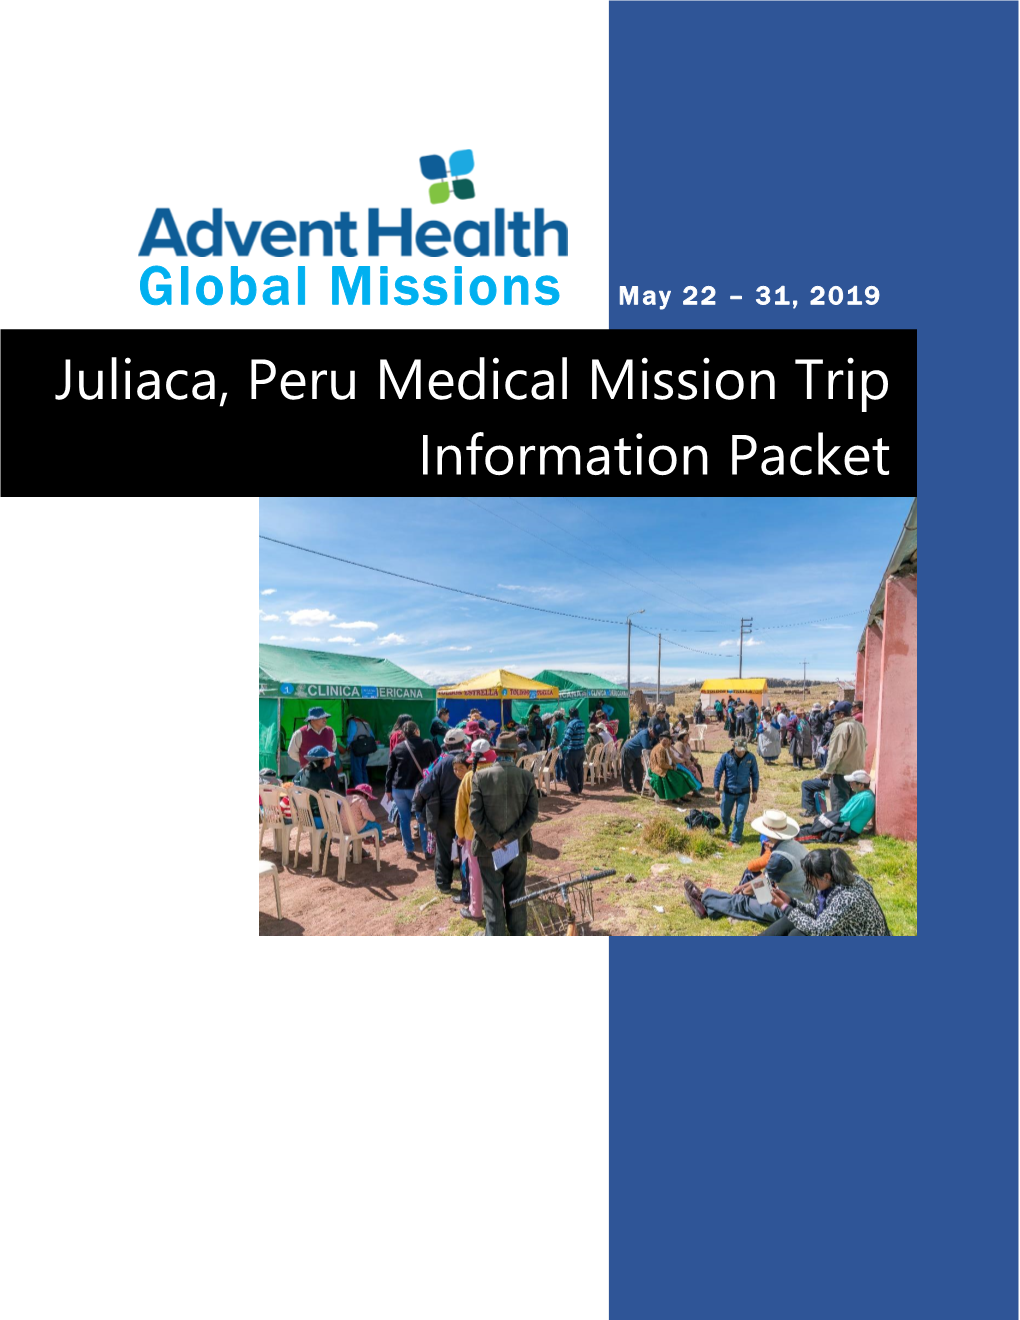 Juliaca, Peru Medical Mission Trip Information Packet